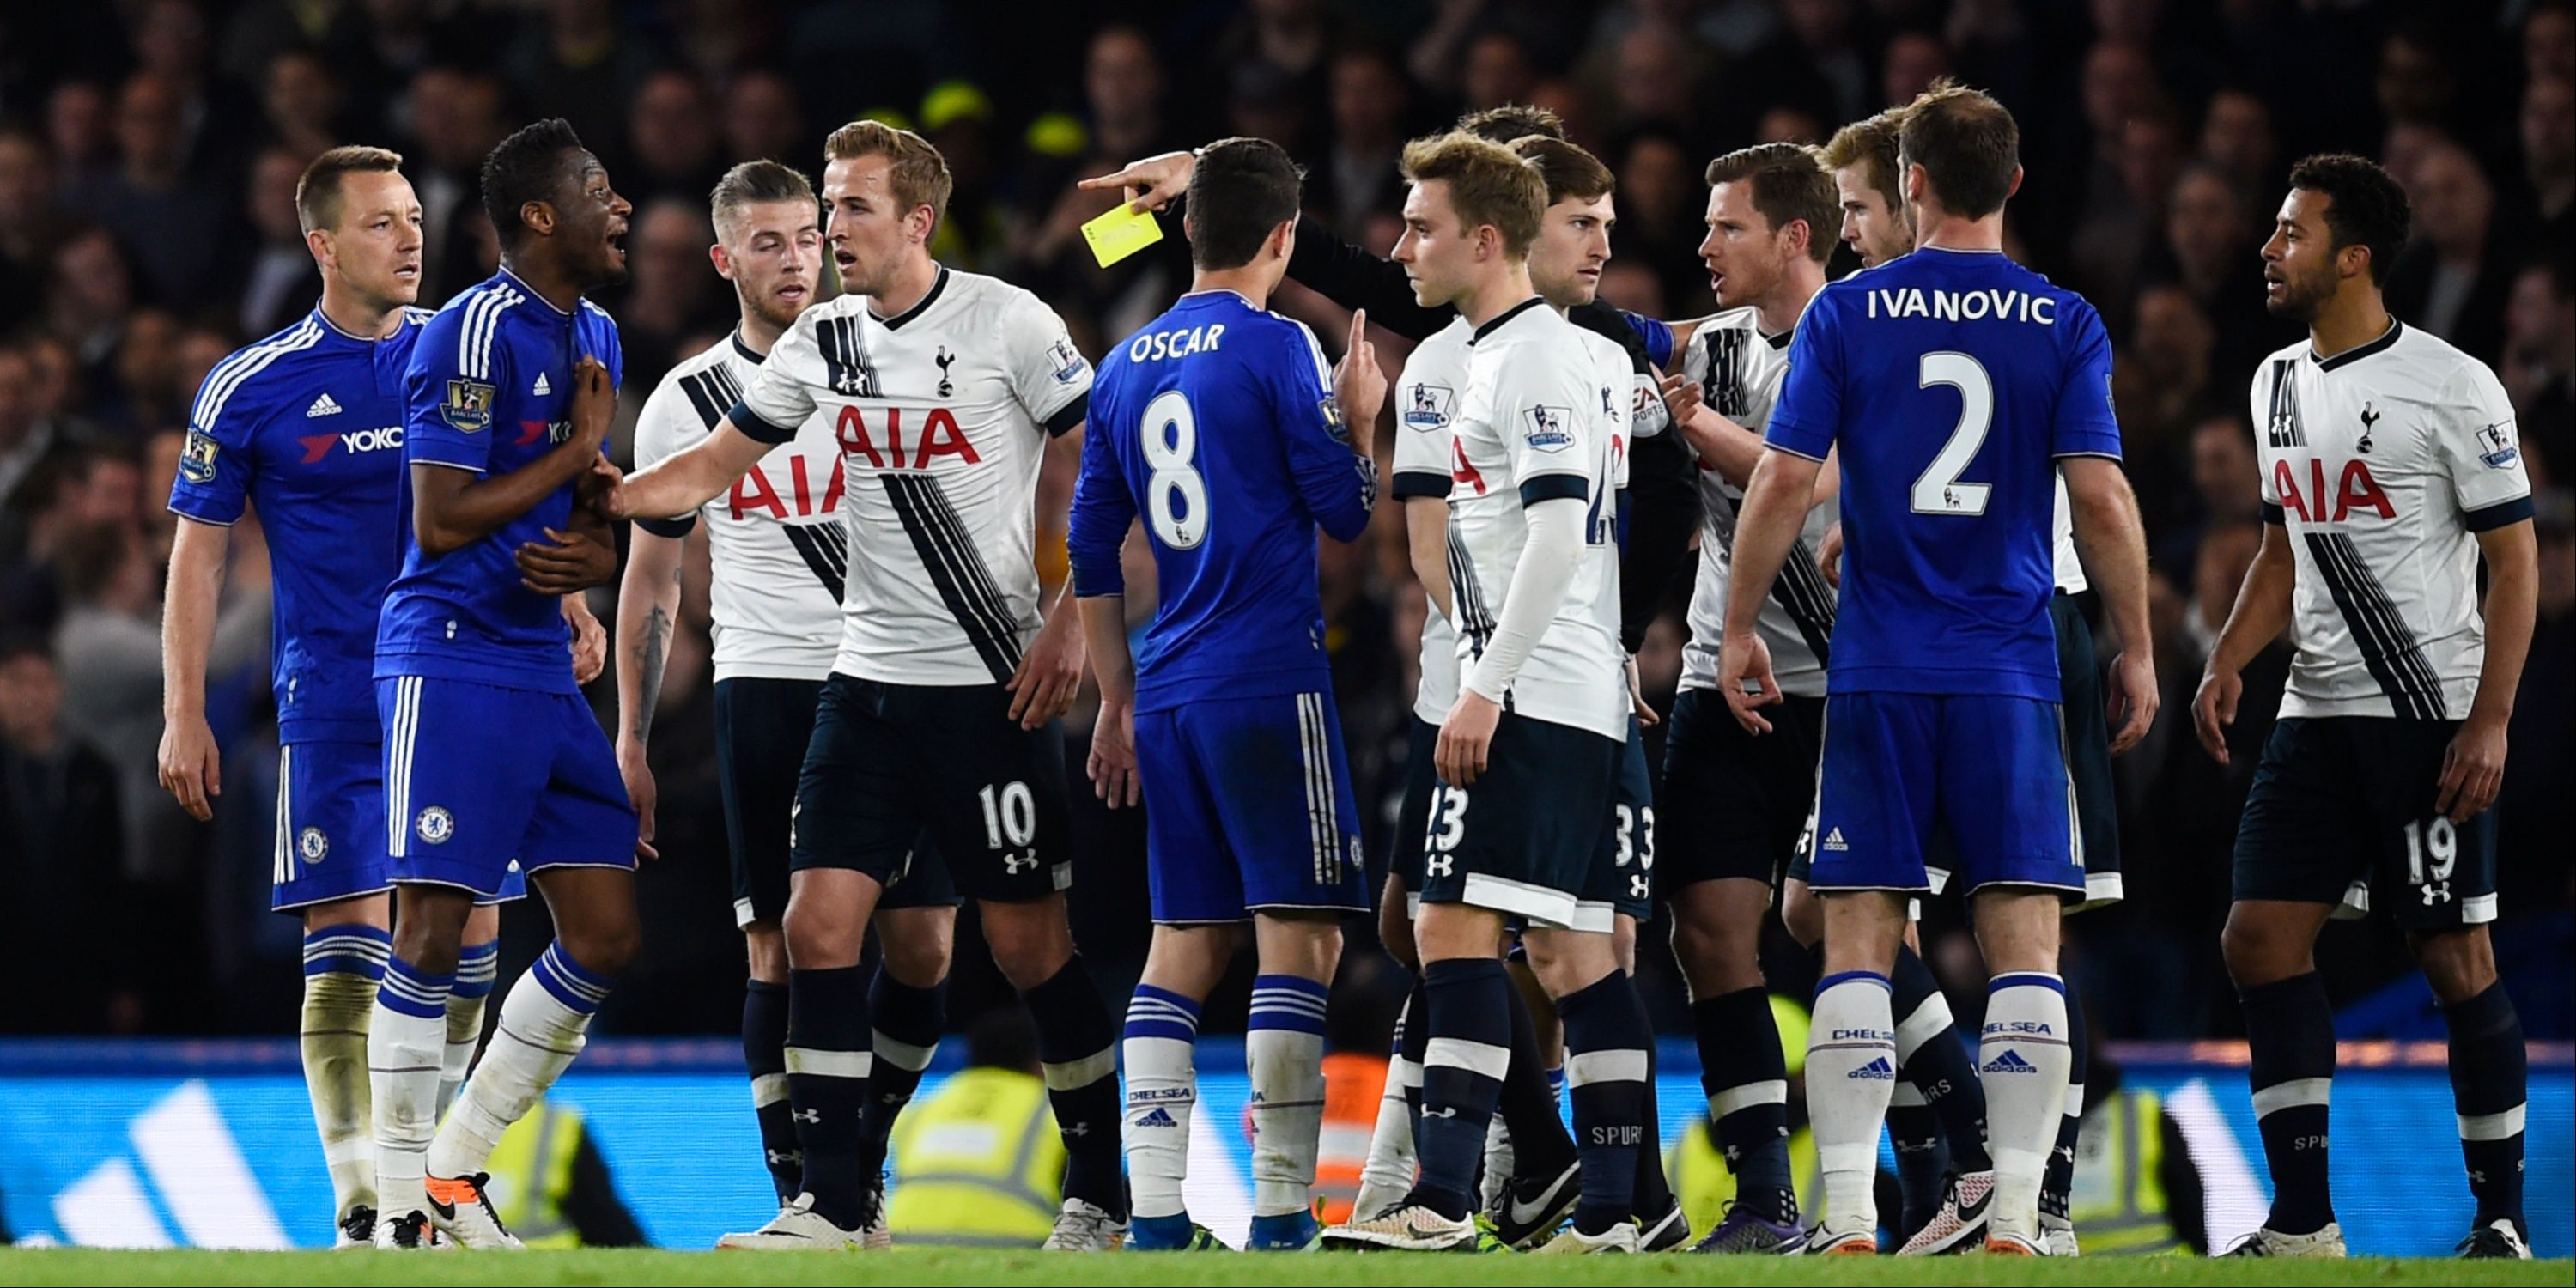 Chelsea v Tottenham Hotspur - Barclays Premier League - Stamford Bridge - 2/5/16